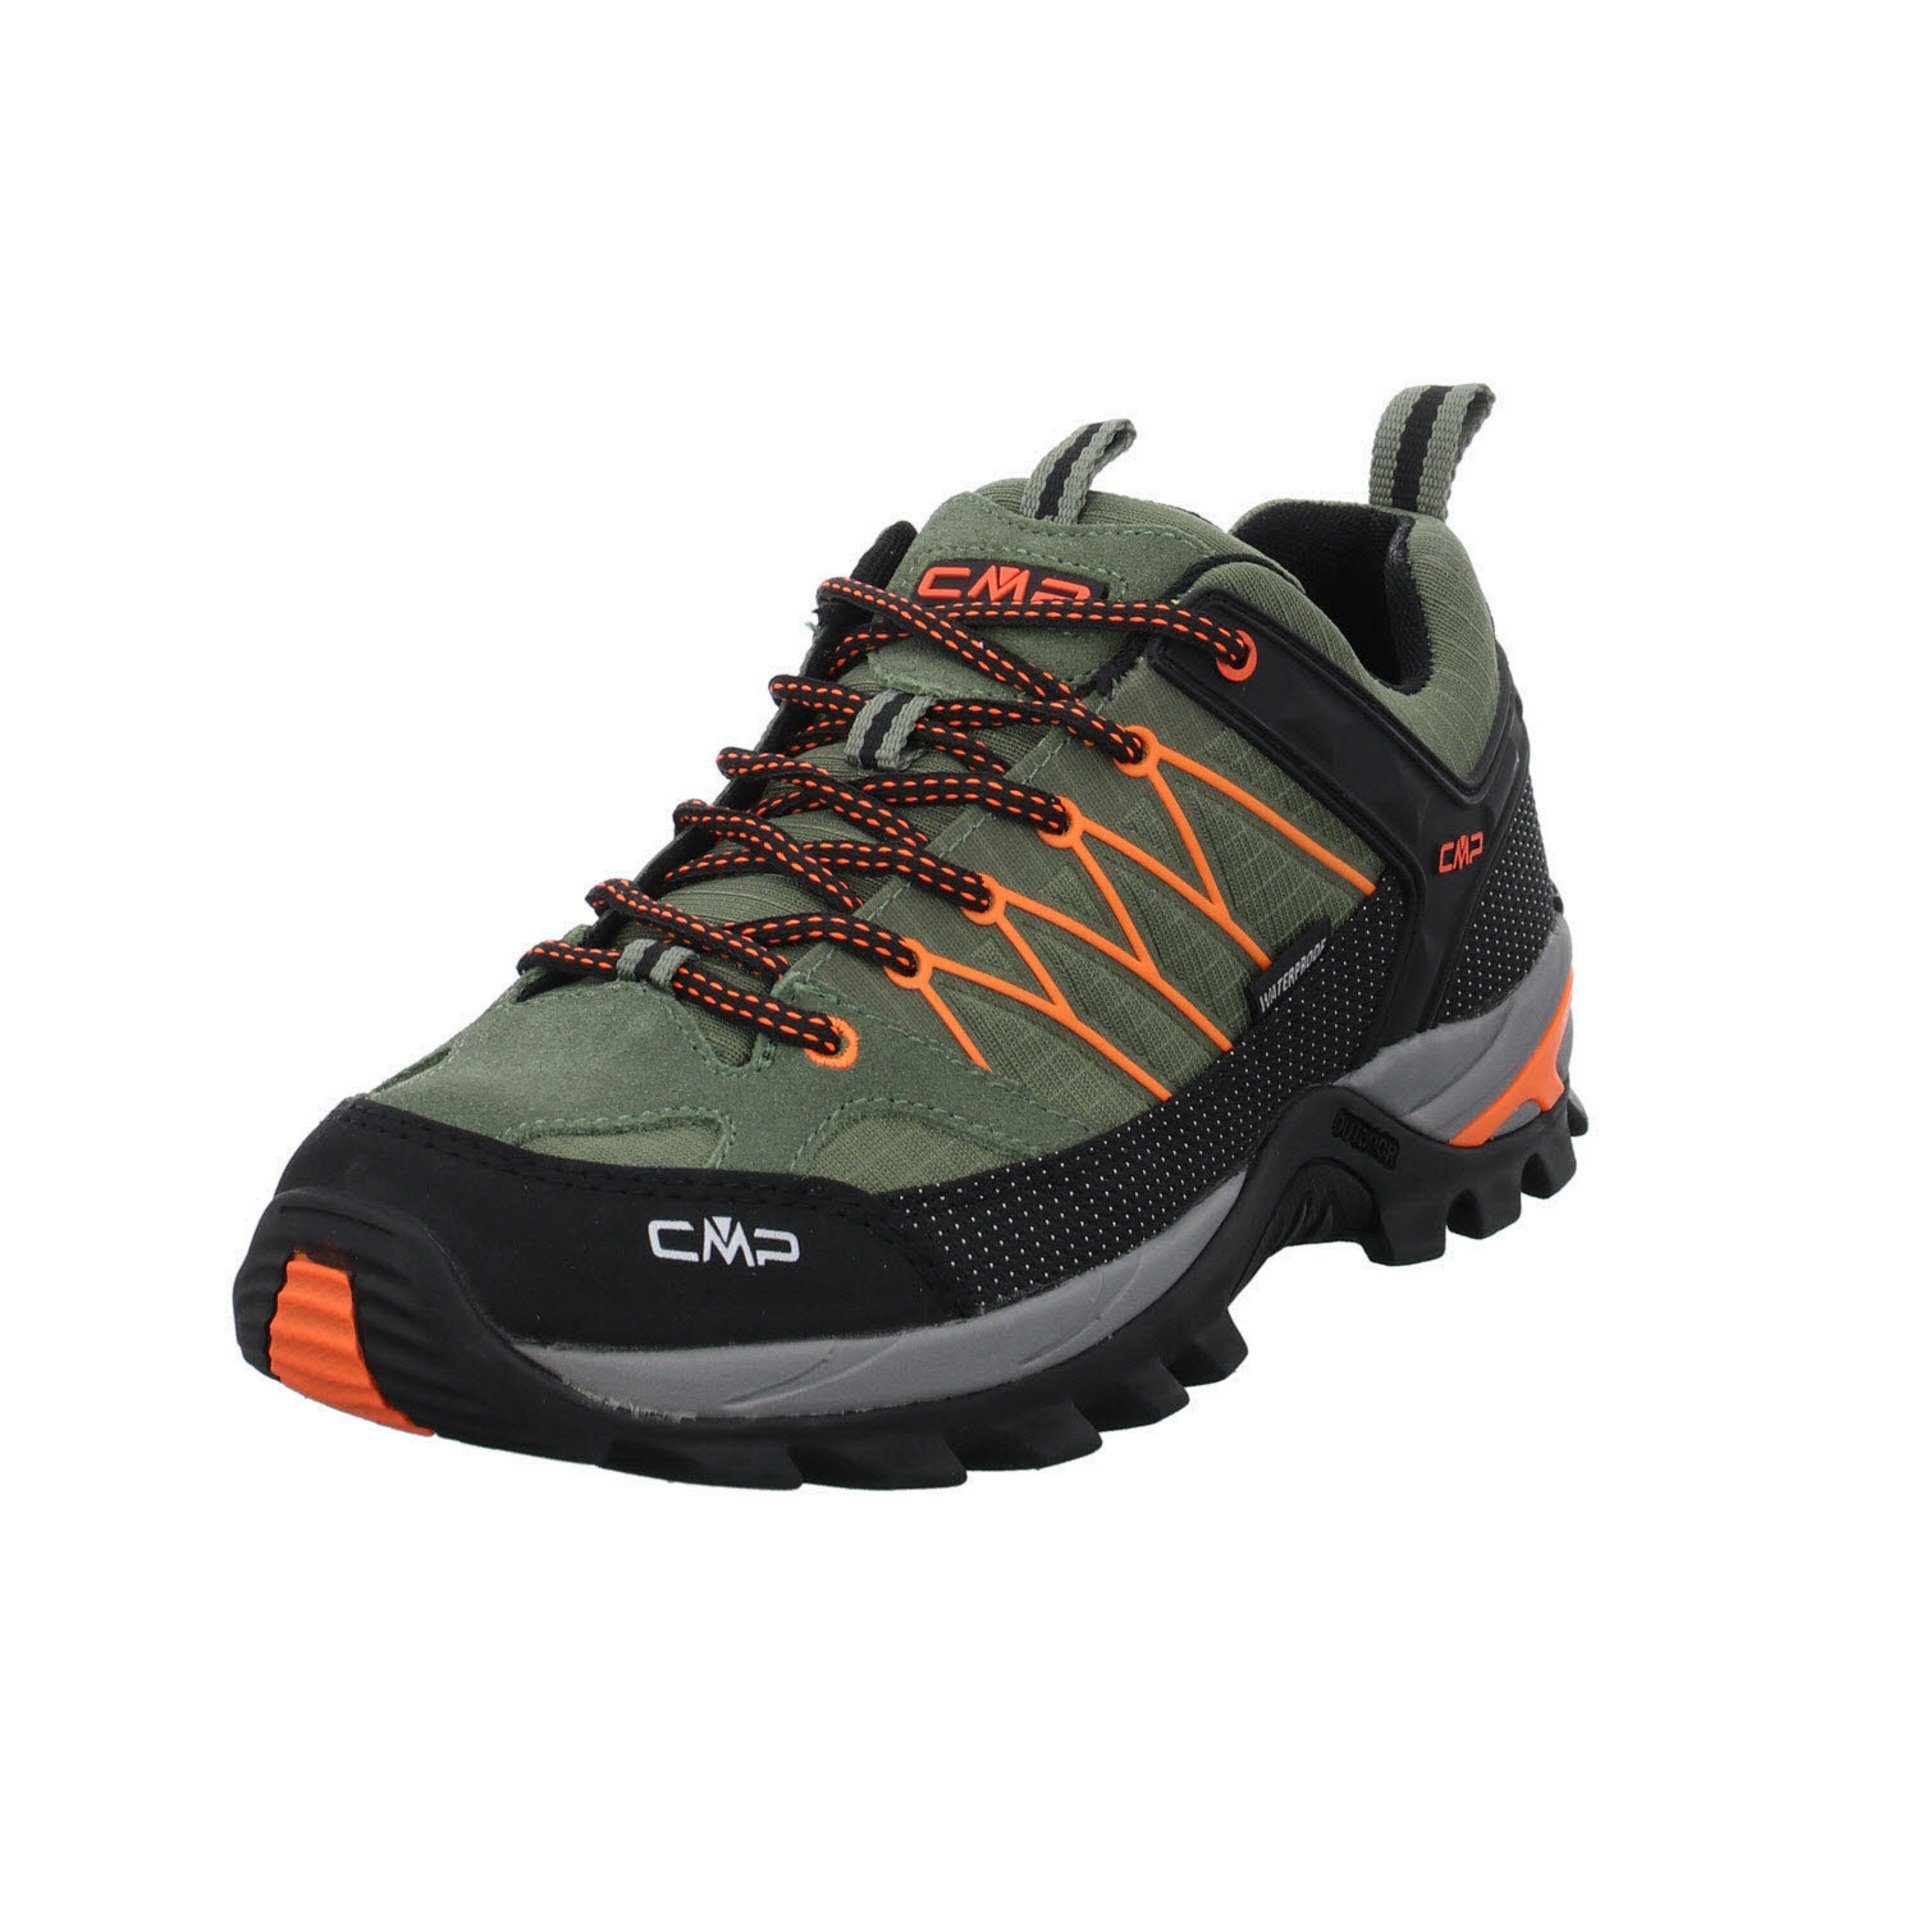 CMP Herren Outdoor Schuhe Rigel Low Outdoorschuh Outdoorschuh Leder-/Textilkombination orange (506)